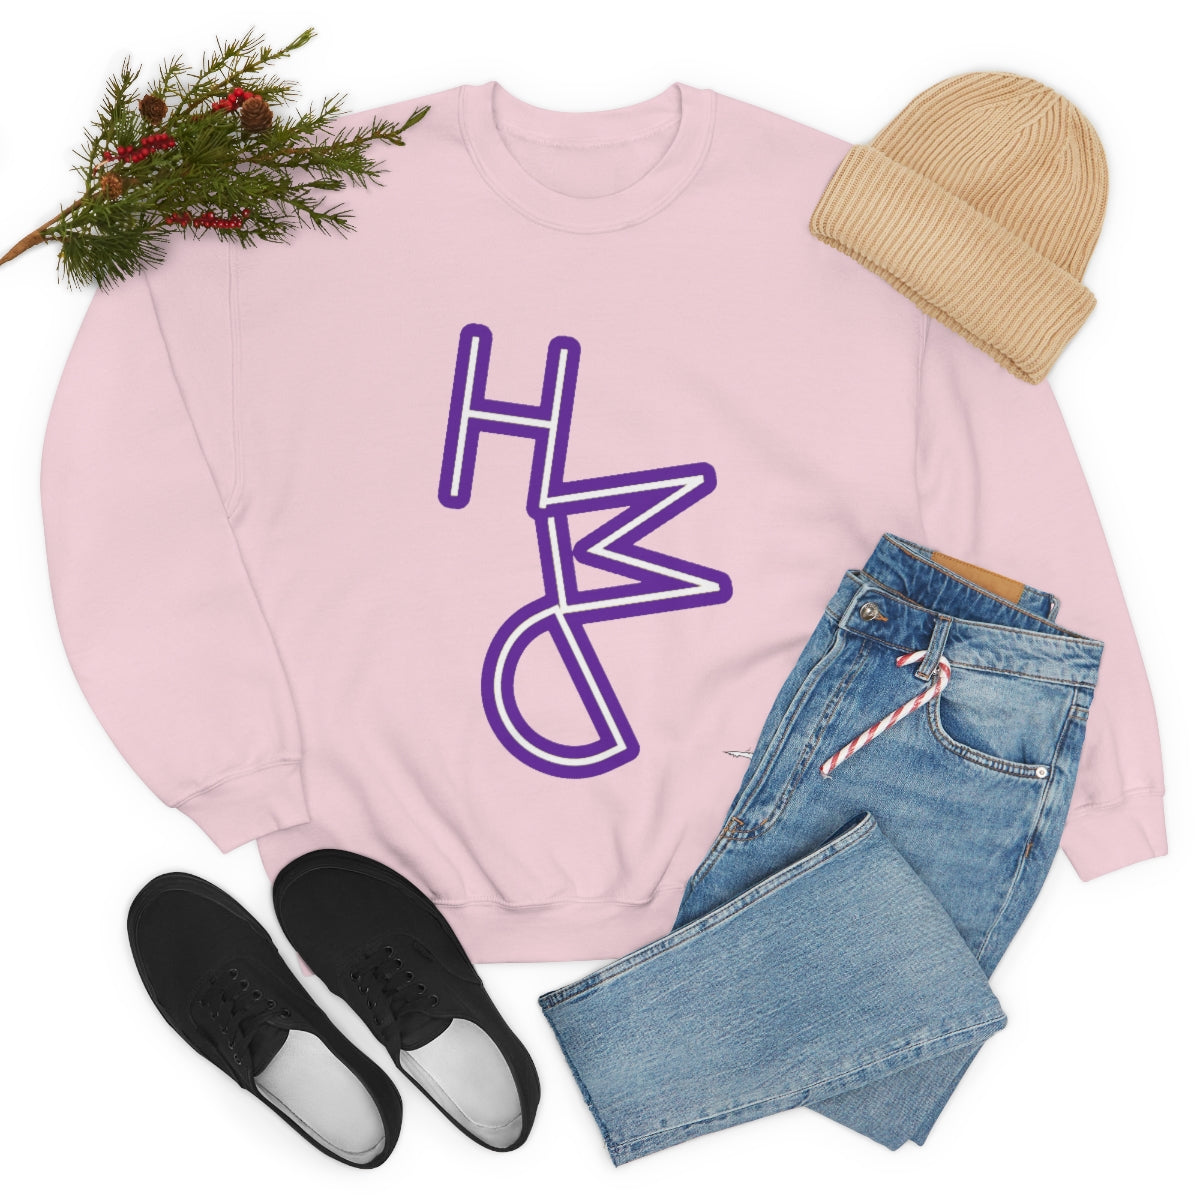 Hammond Heavy Blend 2™ Crewneck Sweatshirt